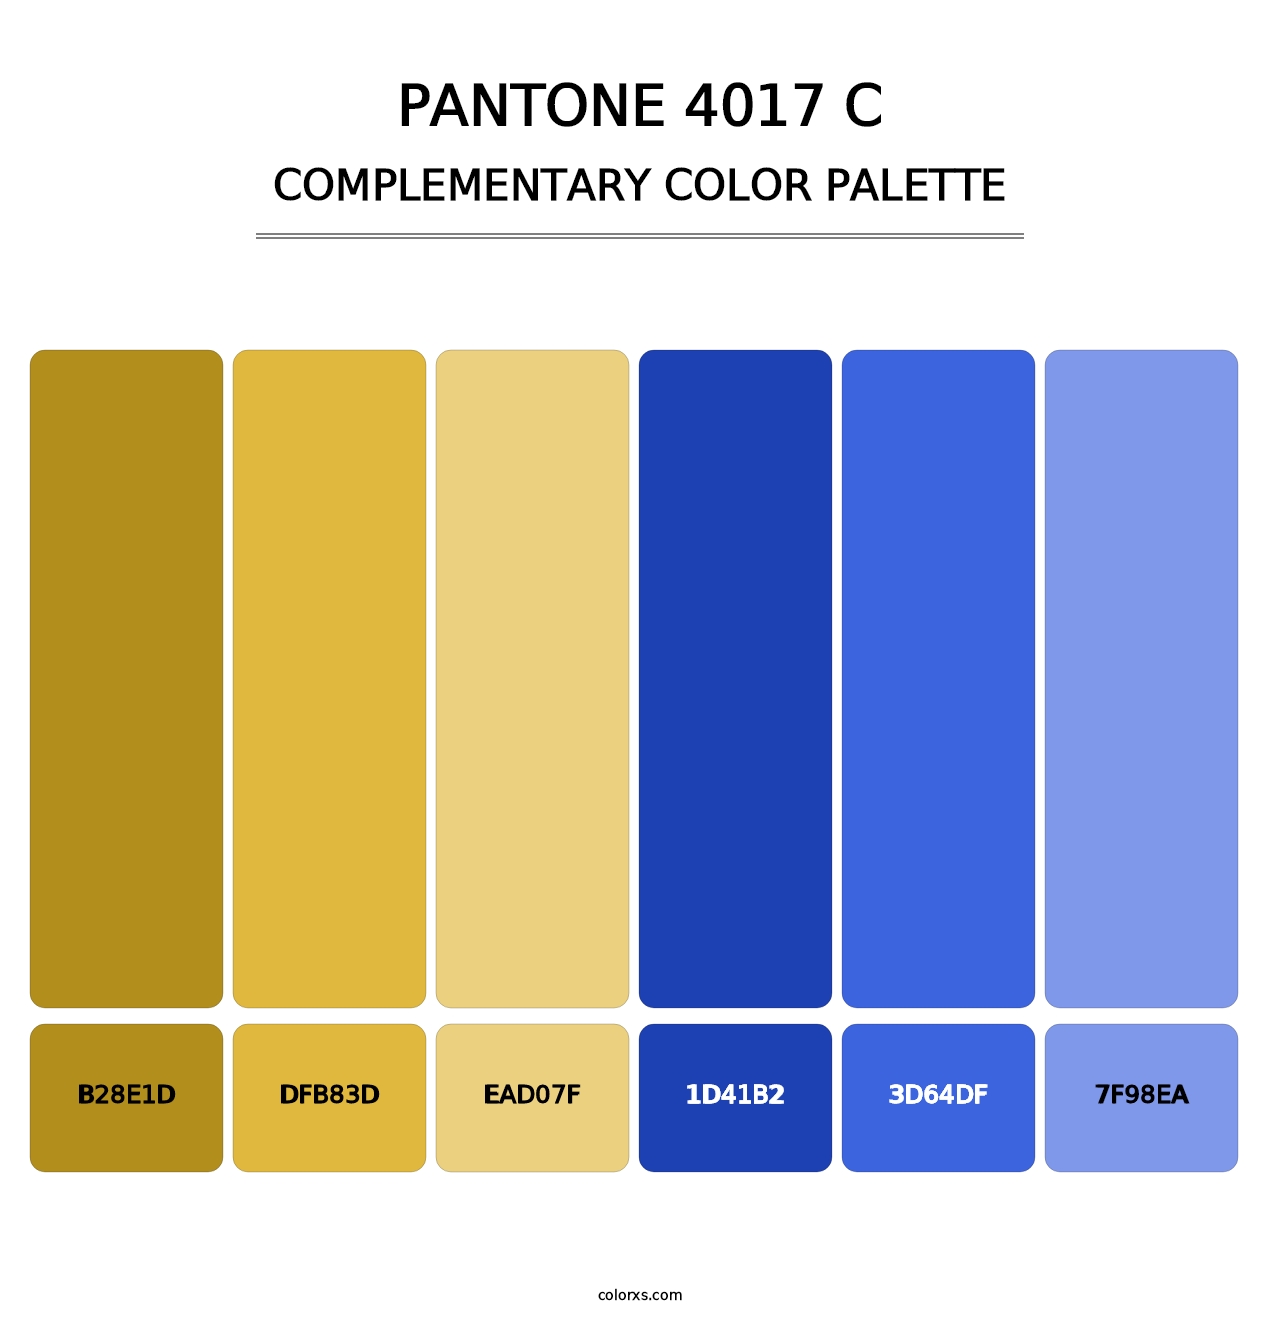 PANTONE 4017 C - Complementary Color Palette